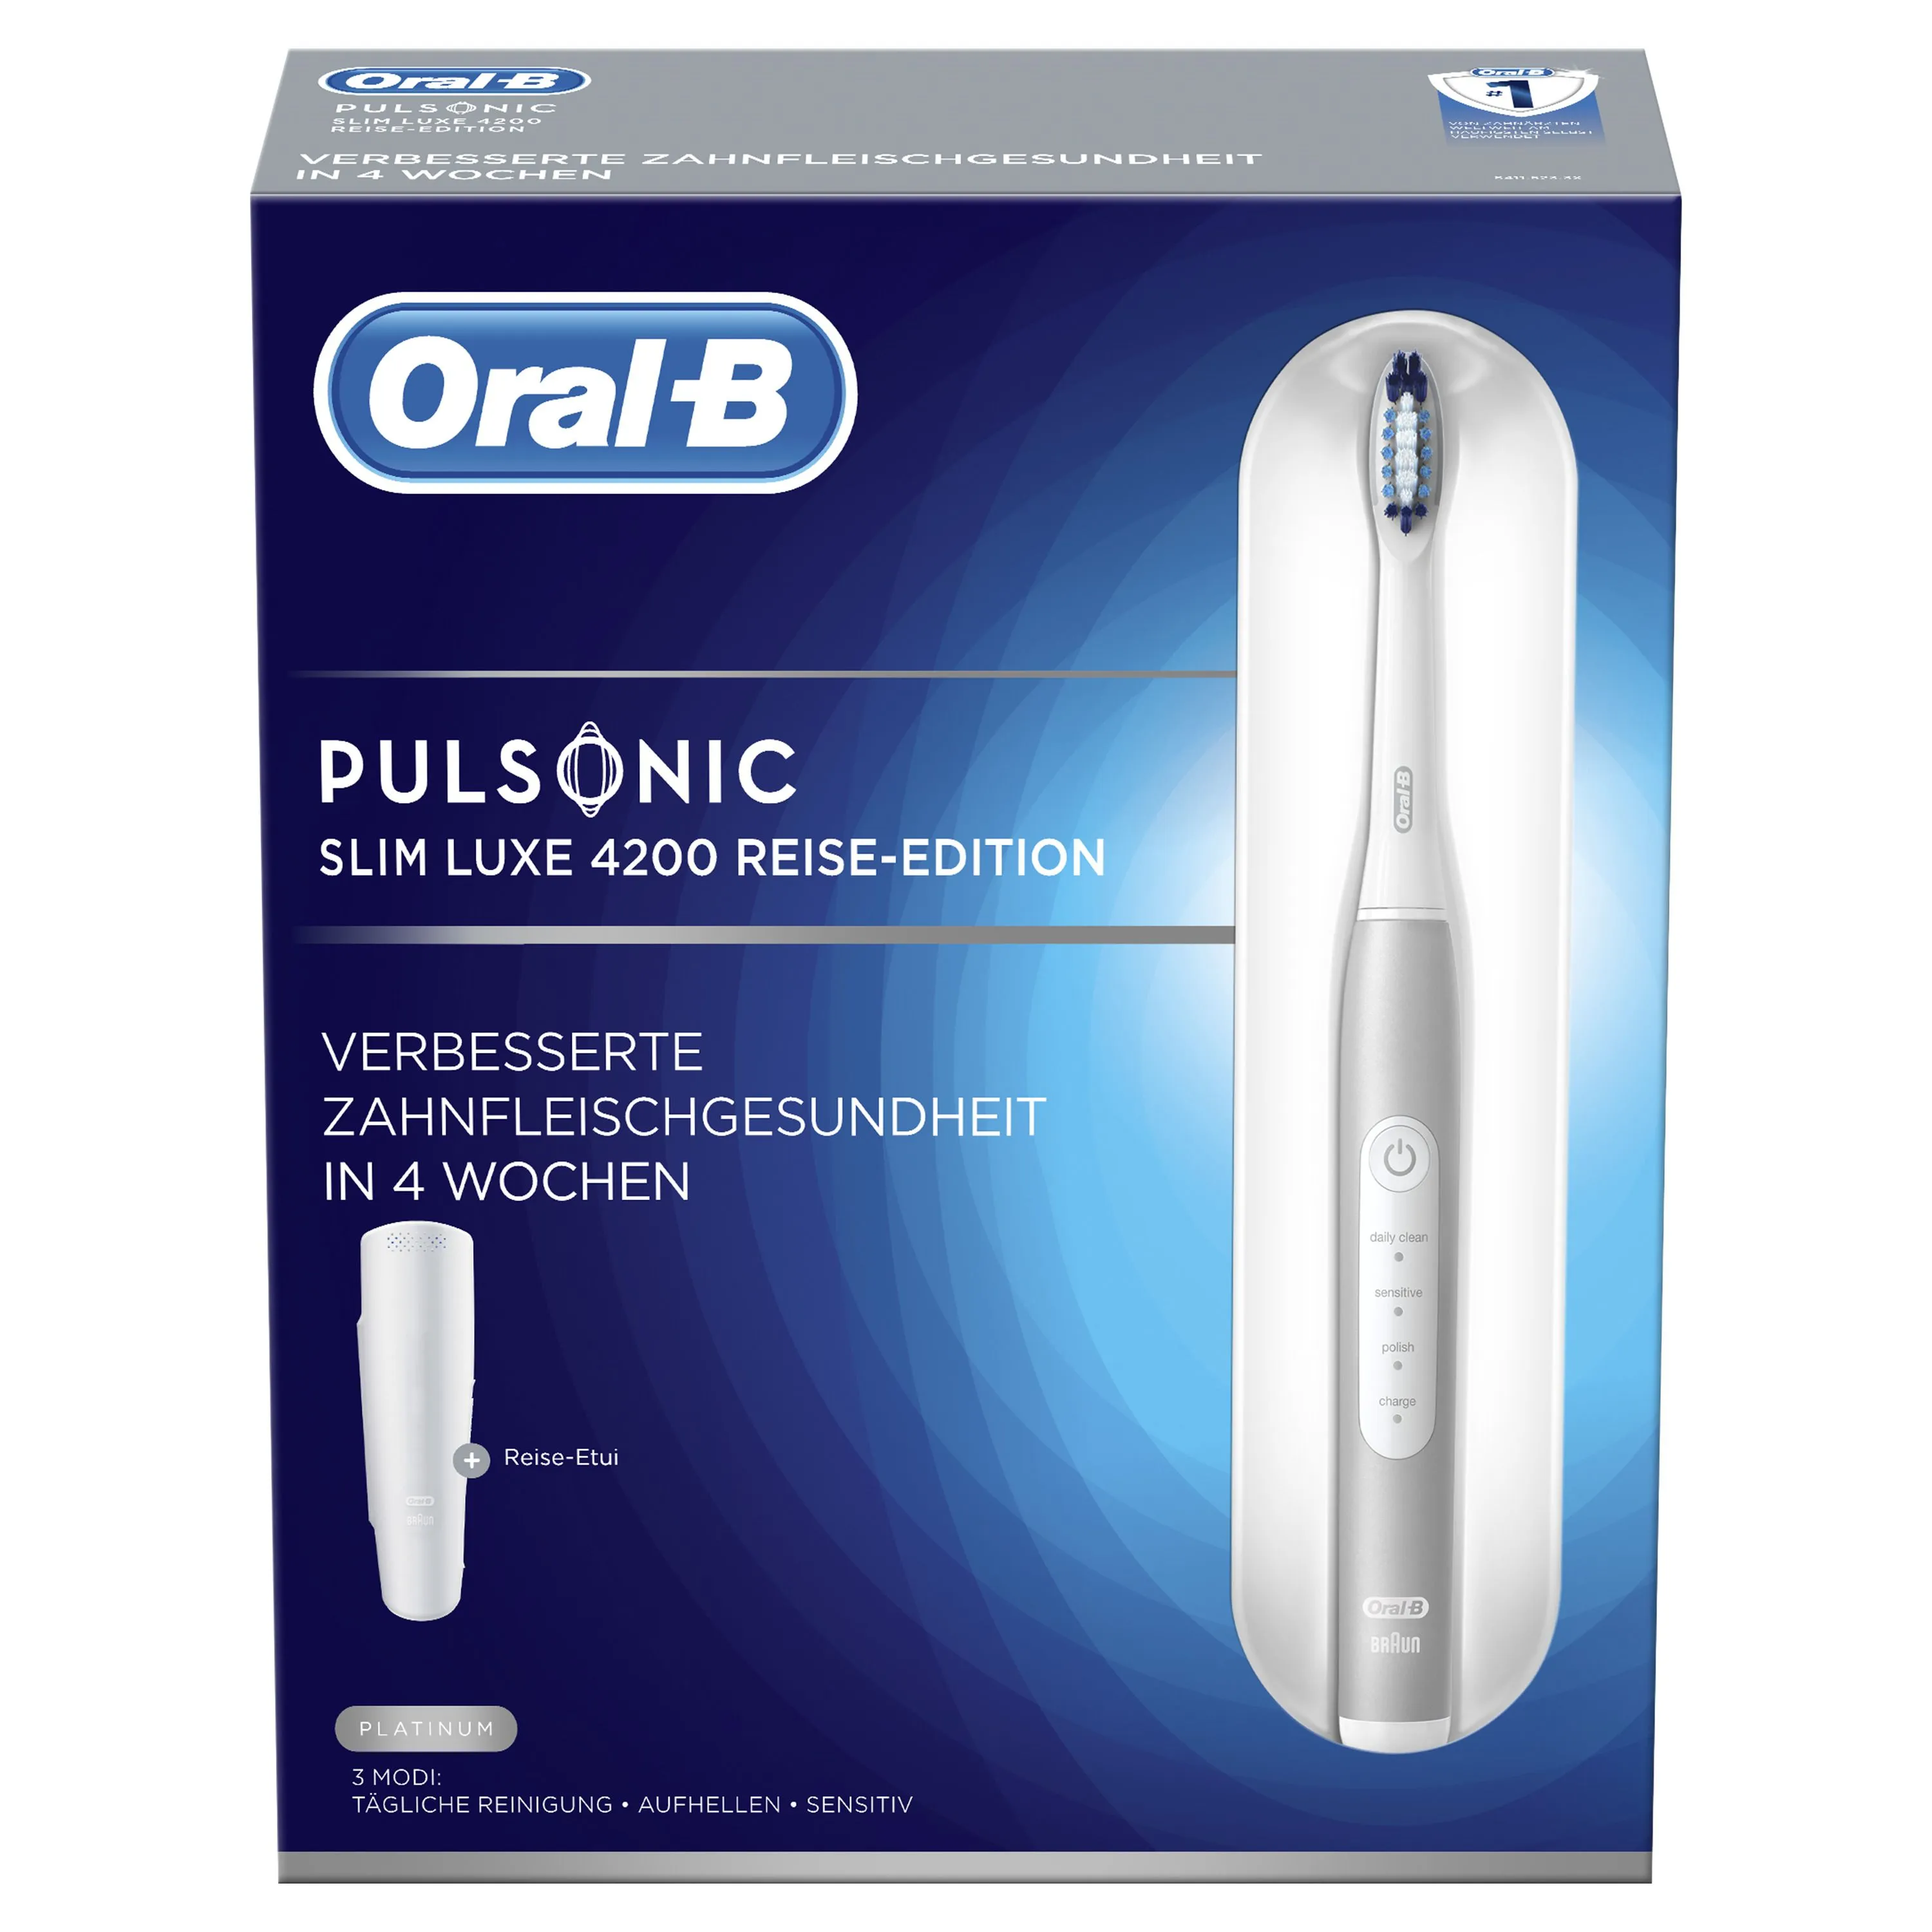 Oral-B Pulsonic Slim Luxe 4200 sonický zubní kartáček